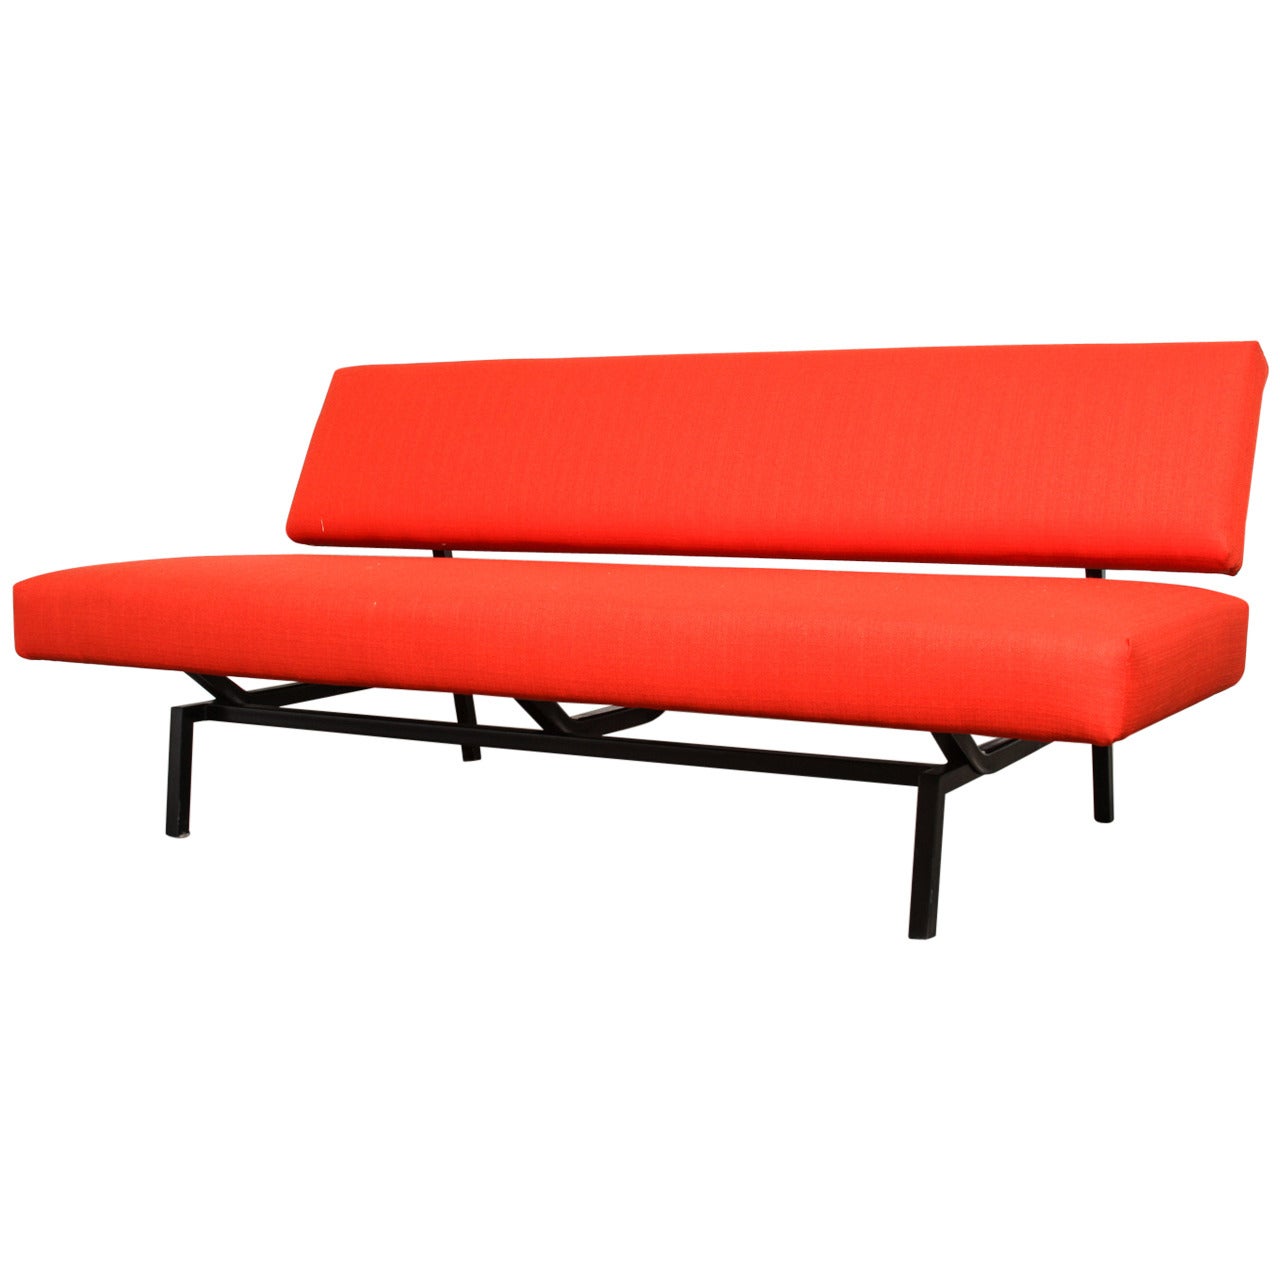 Mid-Century Martin Visser Style Streamline Flame Red Sofa with Black Frame For Sale